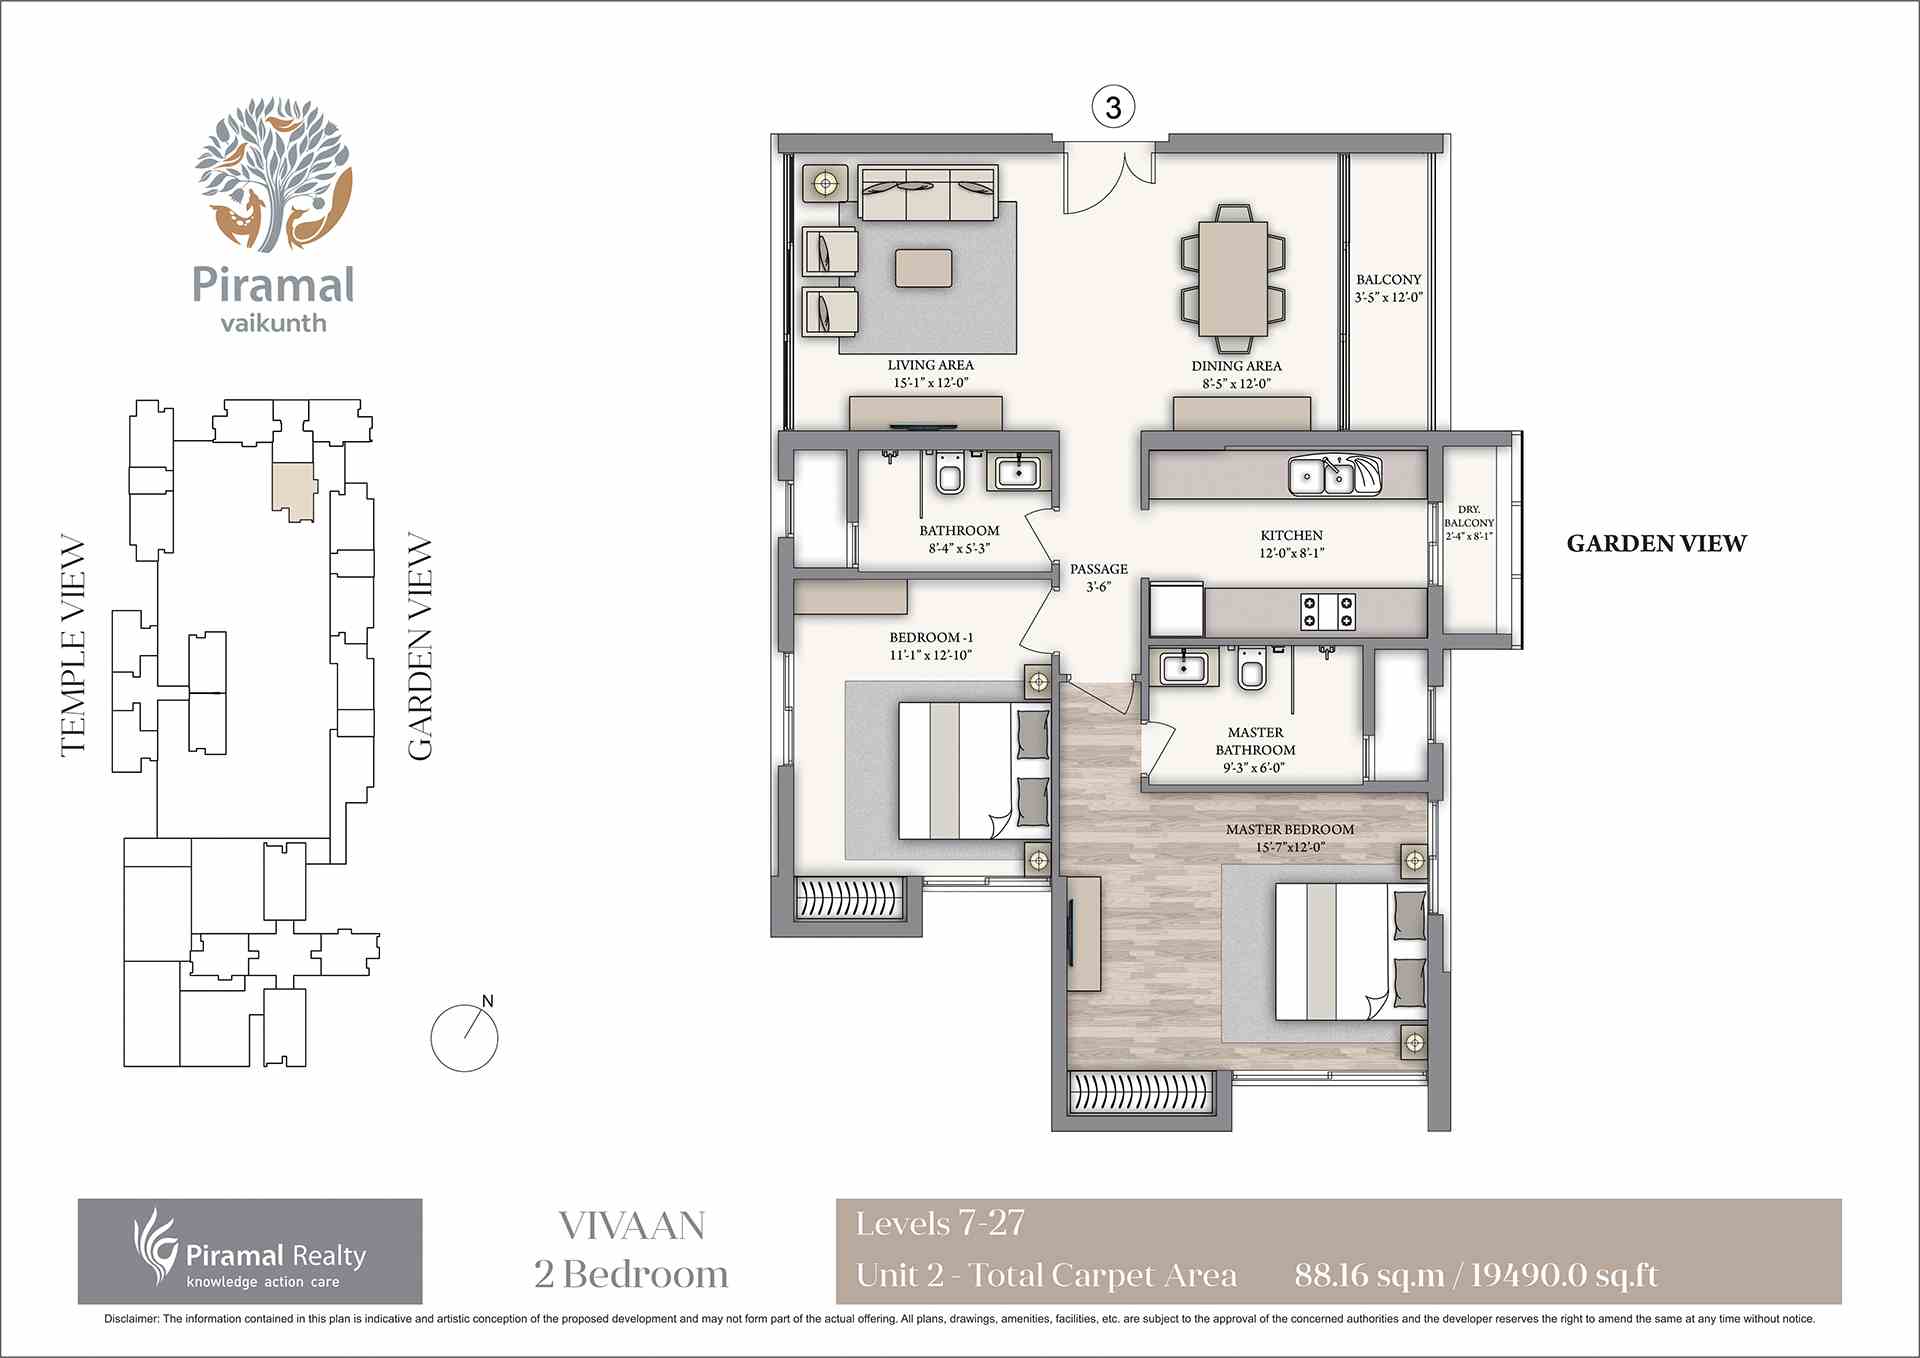 Piramal Vaikunth Floor Plan